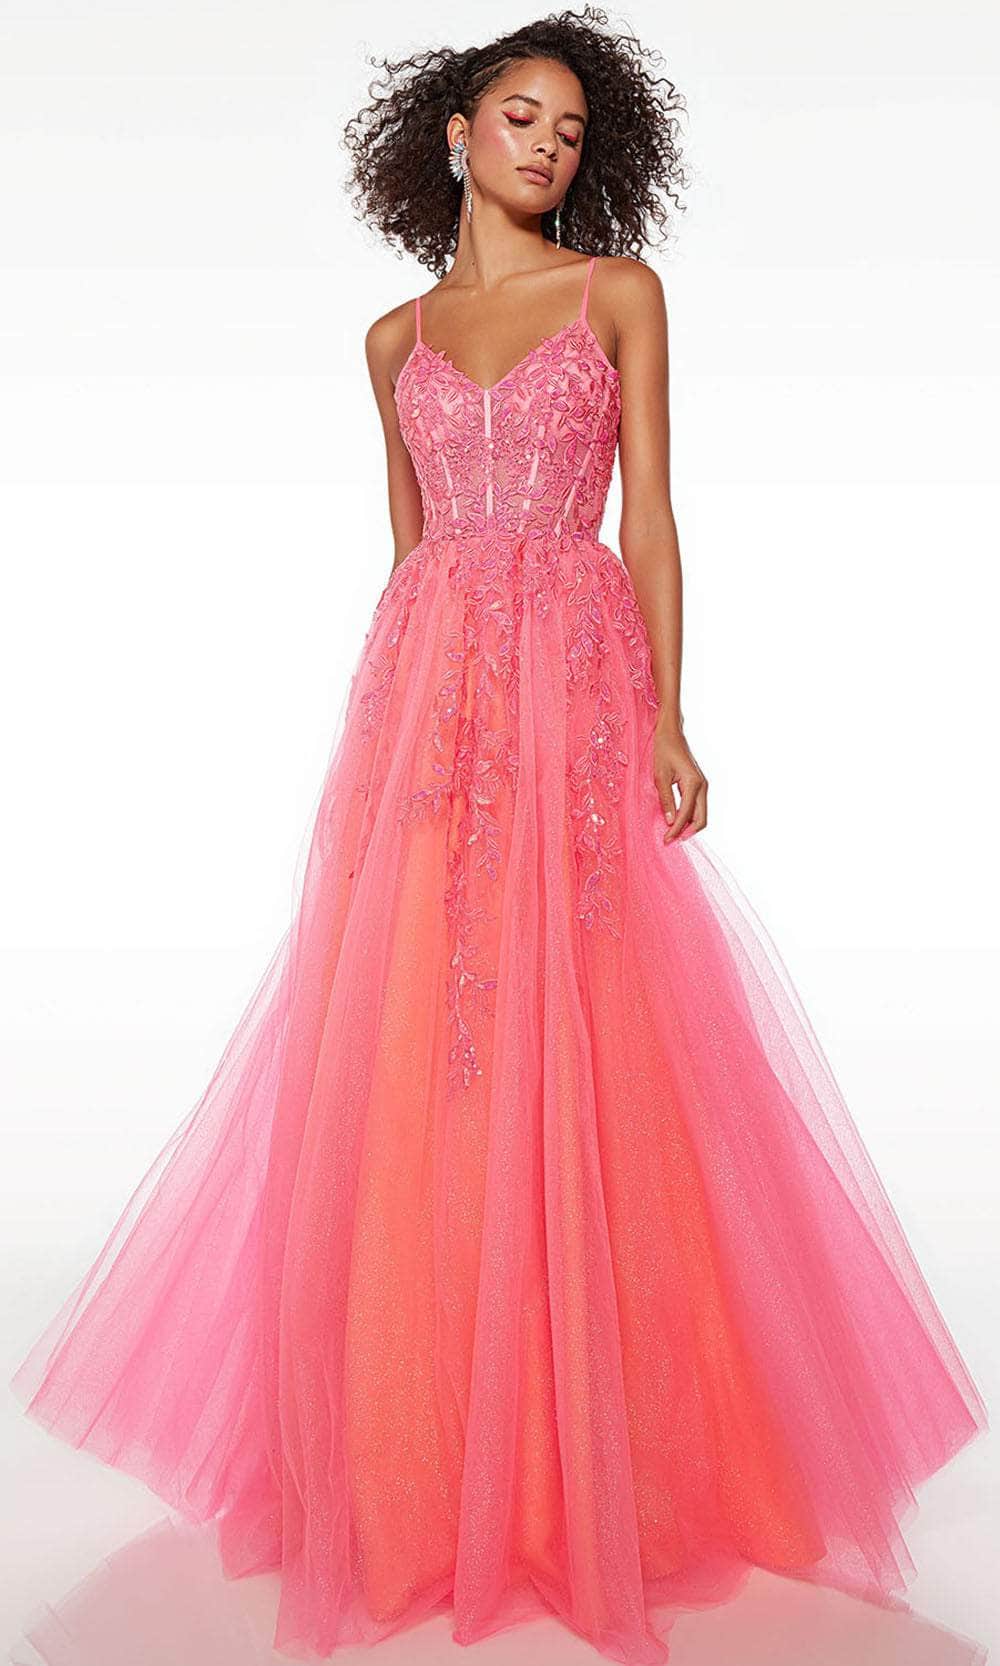 Alyce Paris 61514 - Sleeveless Embroidered V-Neck Prom Dress
